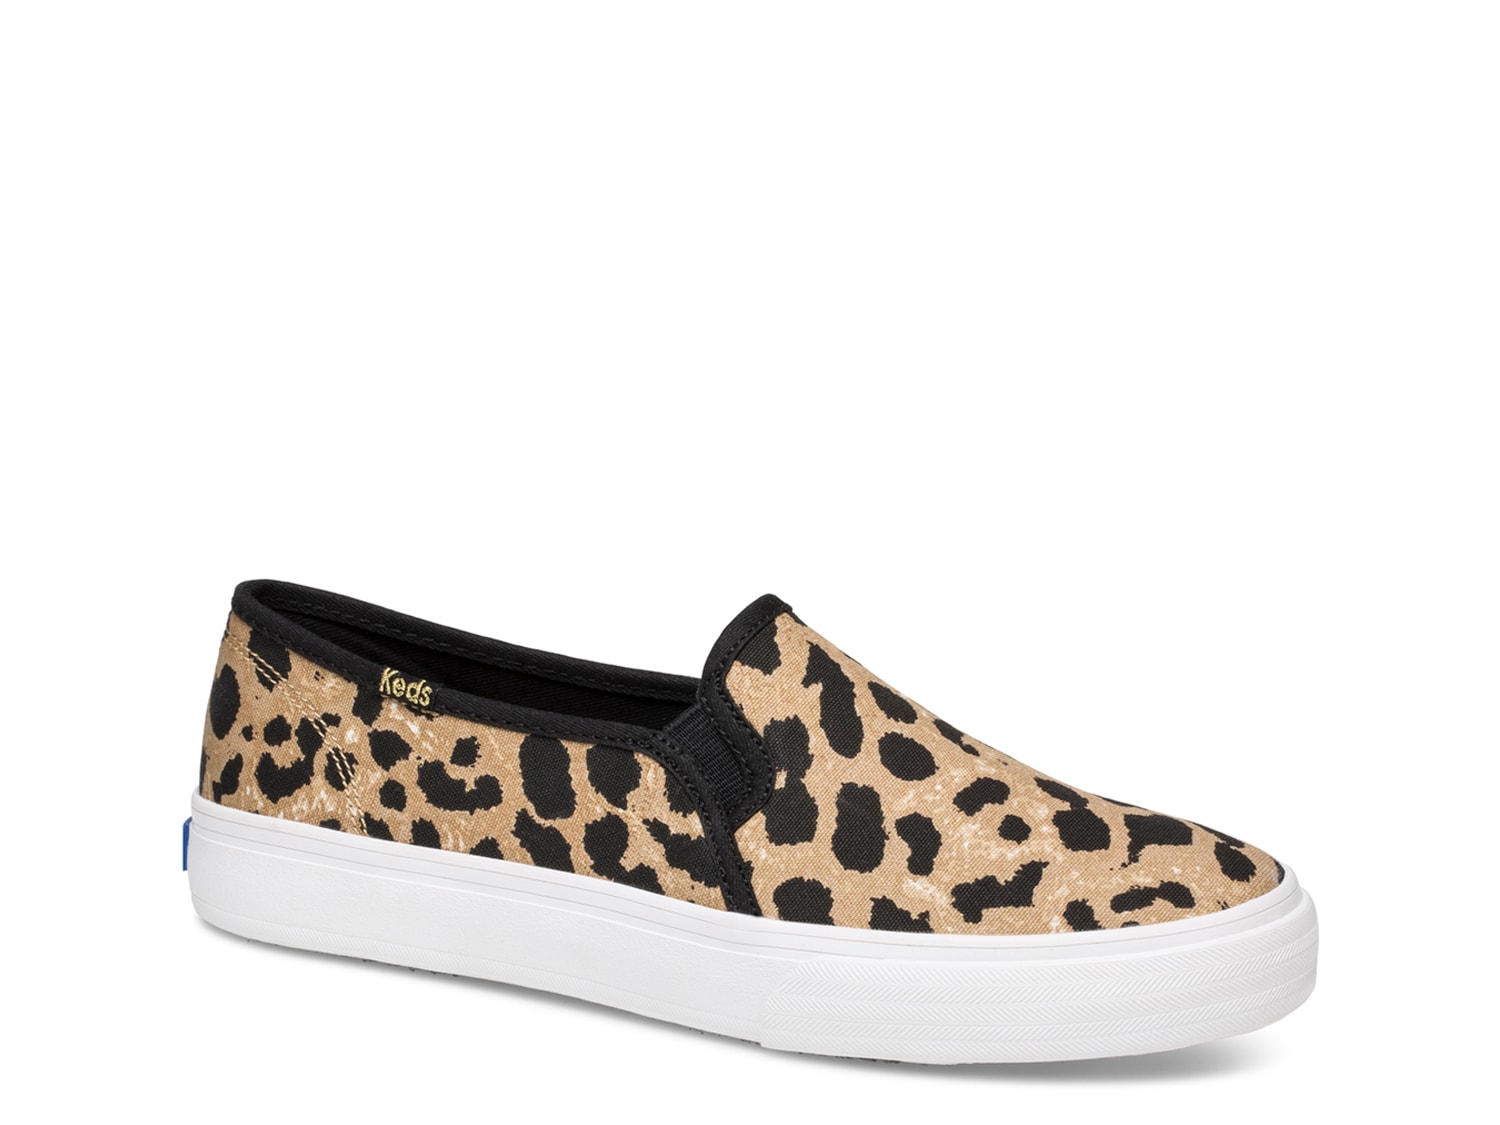 leopard slip on tennis shoes